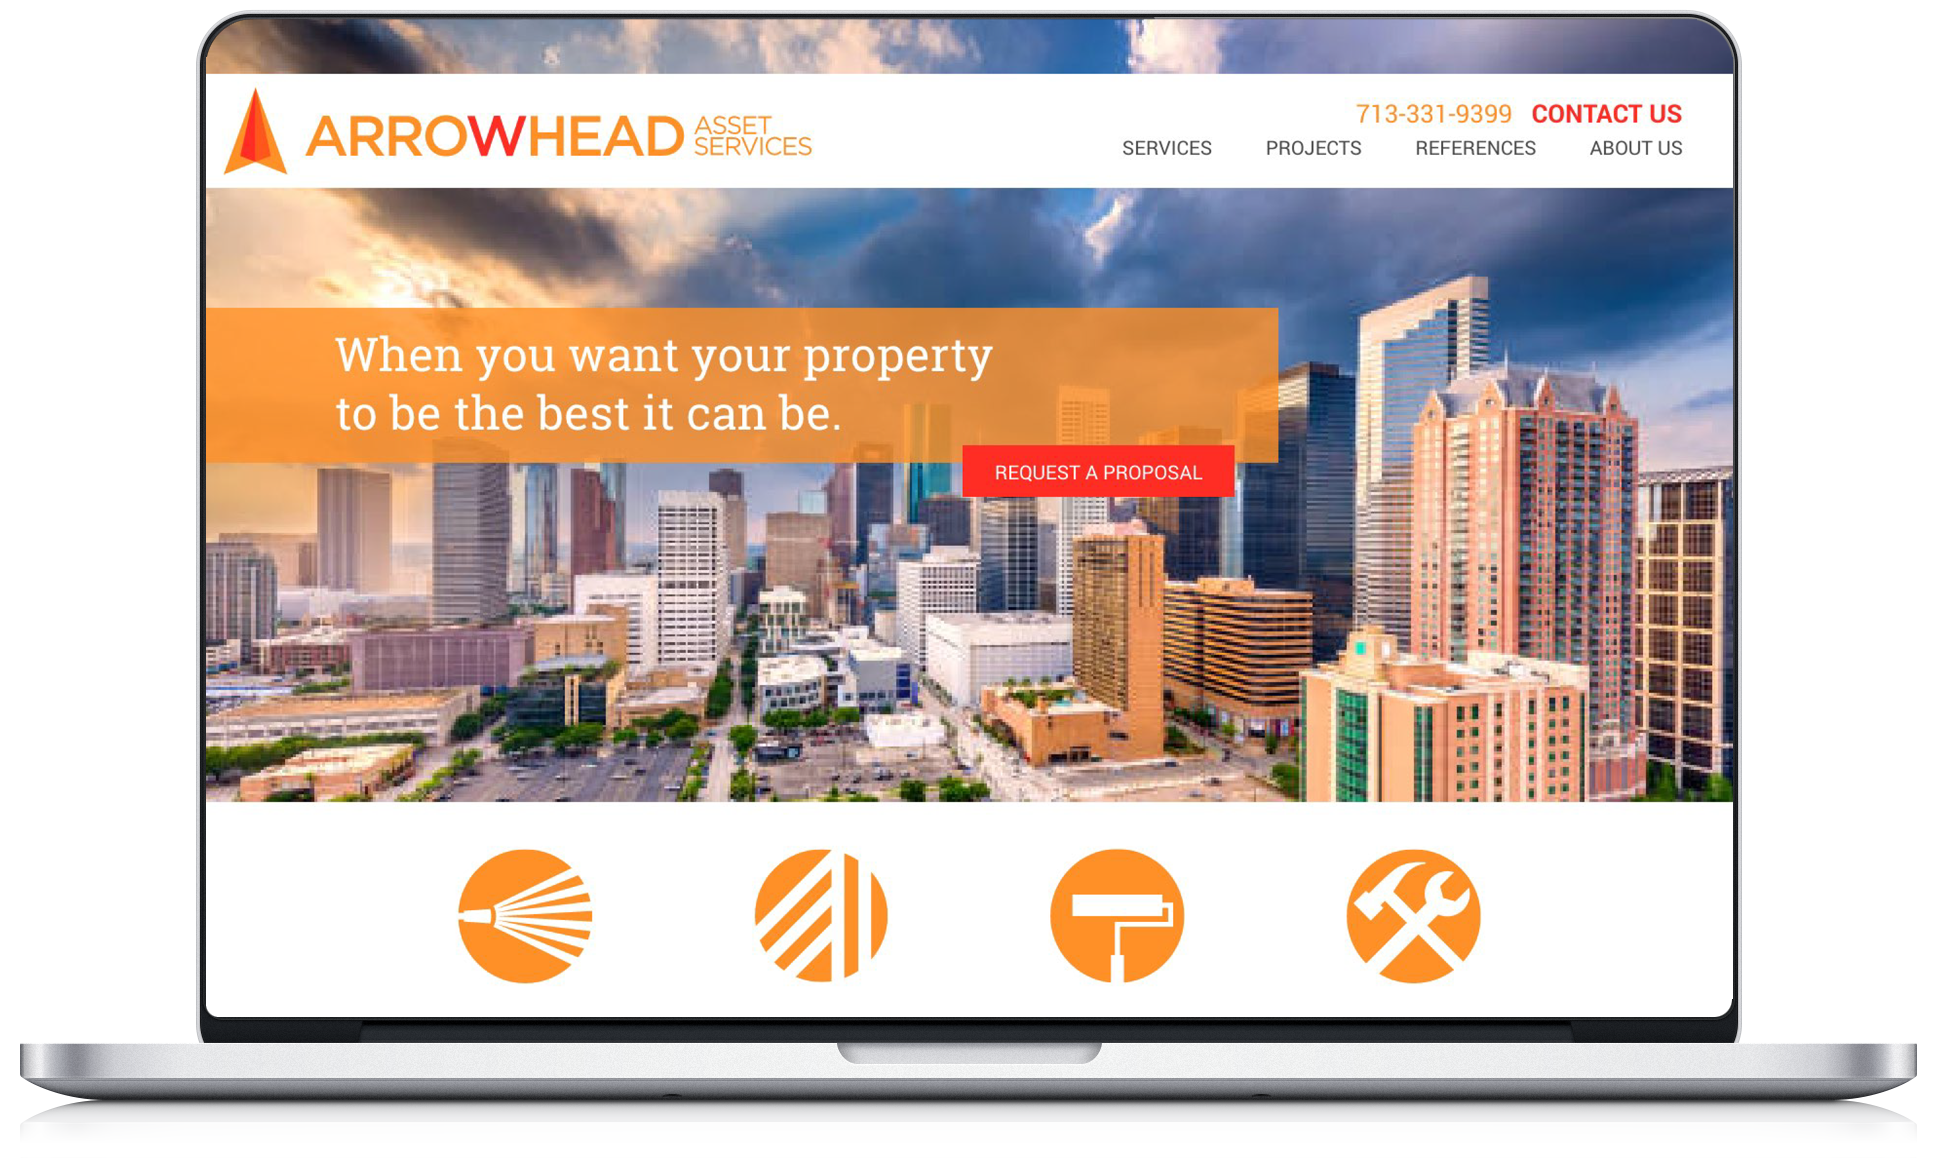 arrowhead asset services website